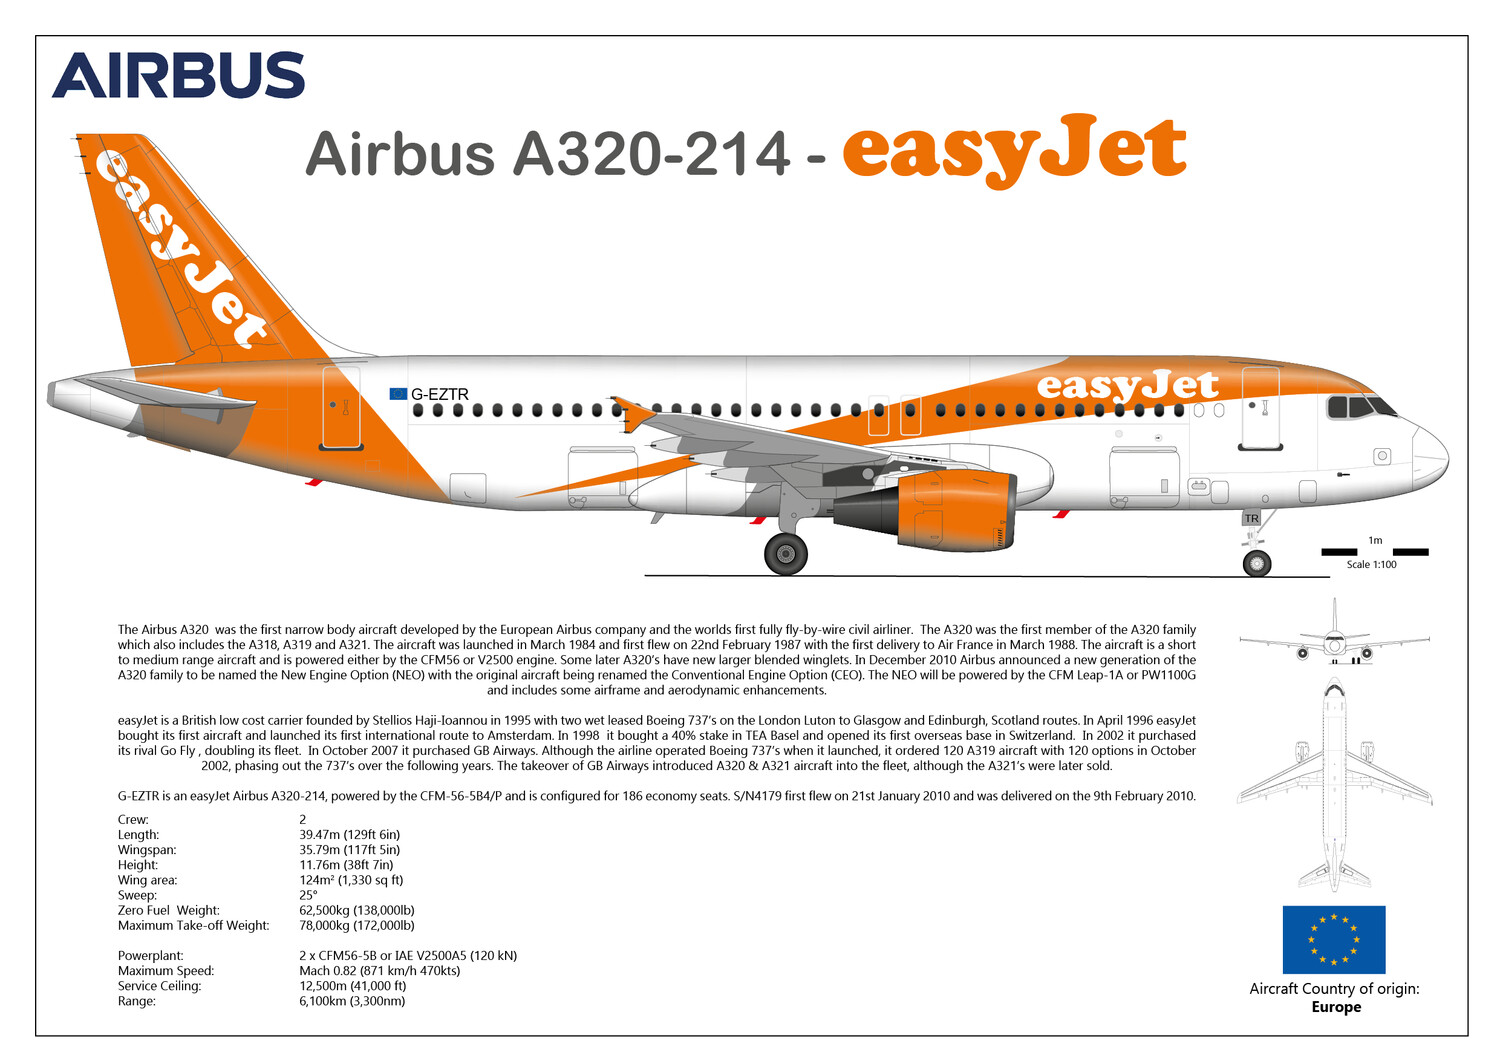 Airbus A320 of easyJet G-EZTR